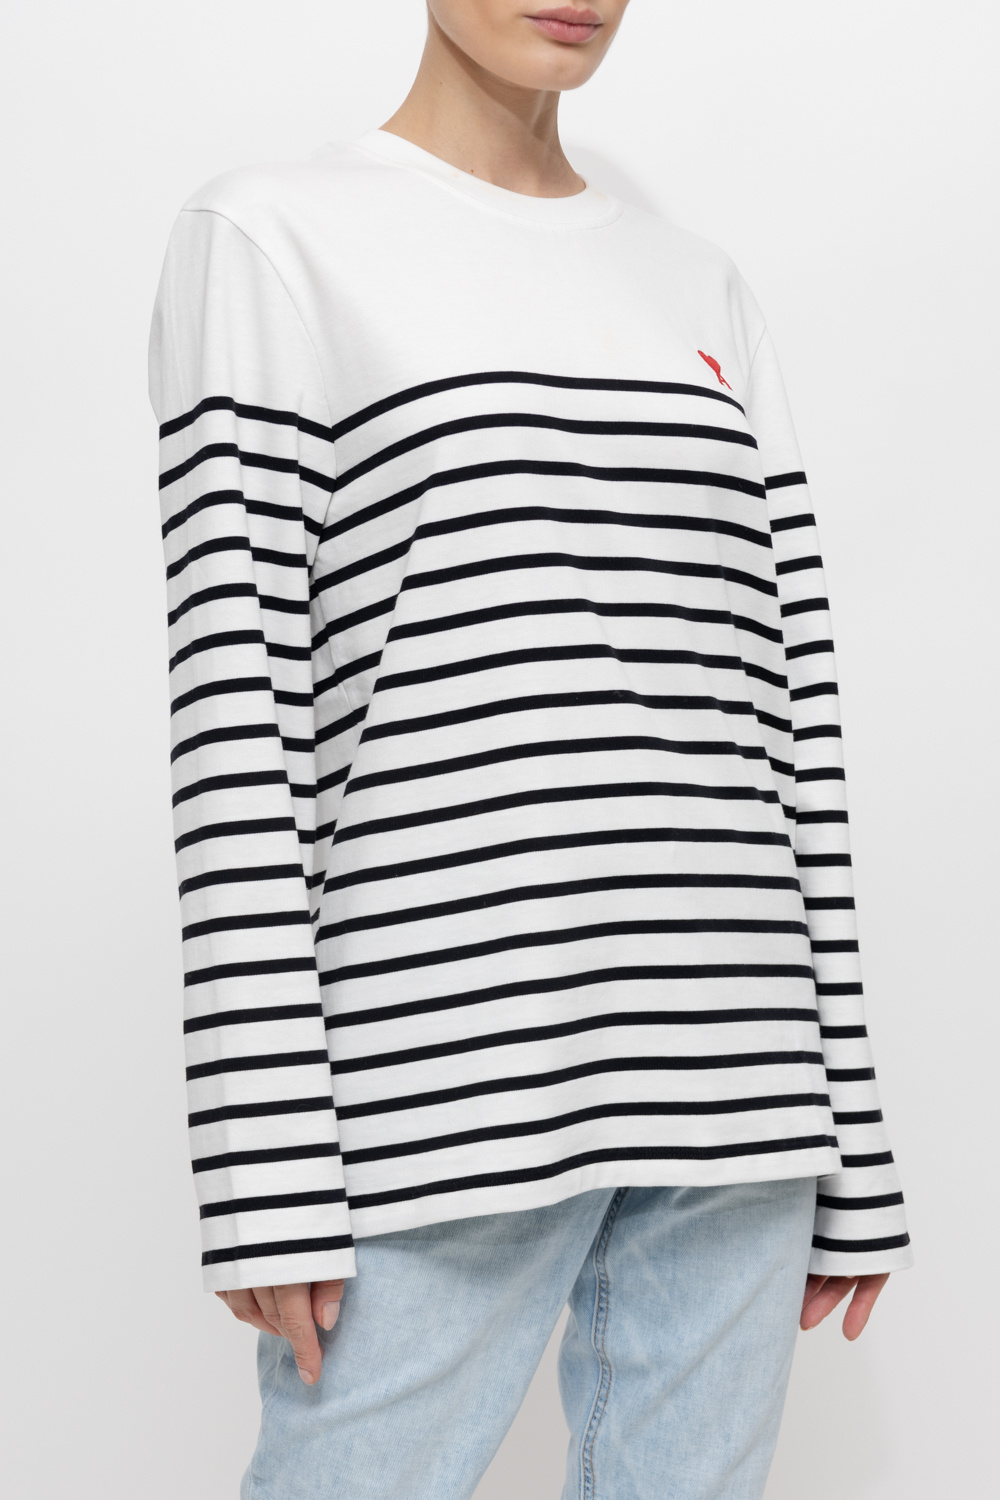 buy adidas originals trefoil graphic boyfriend hoodie napa by martine rose s muir t dresses shirt